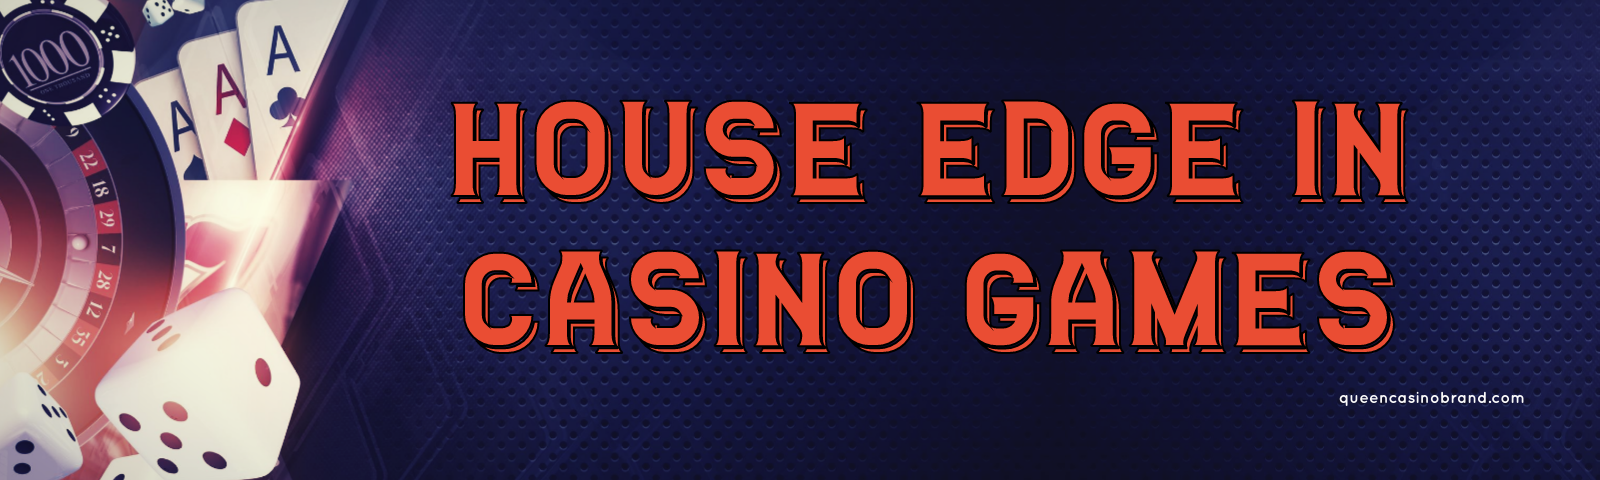 House Edge in Casino Games | Queen Casino Brand